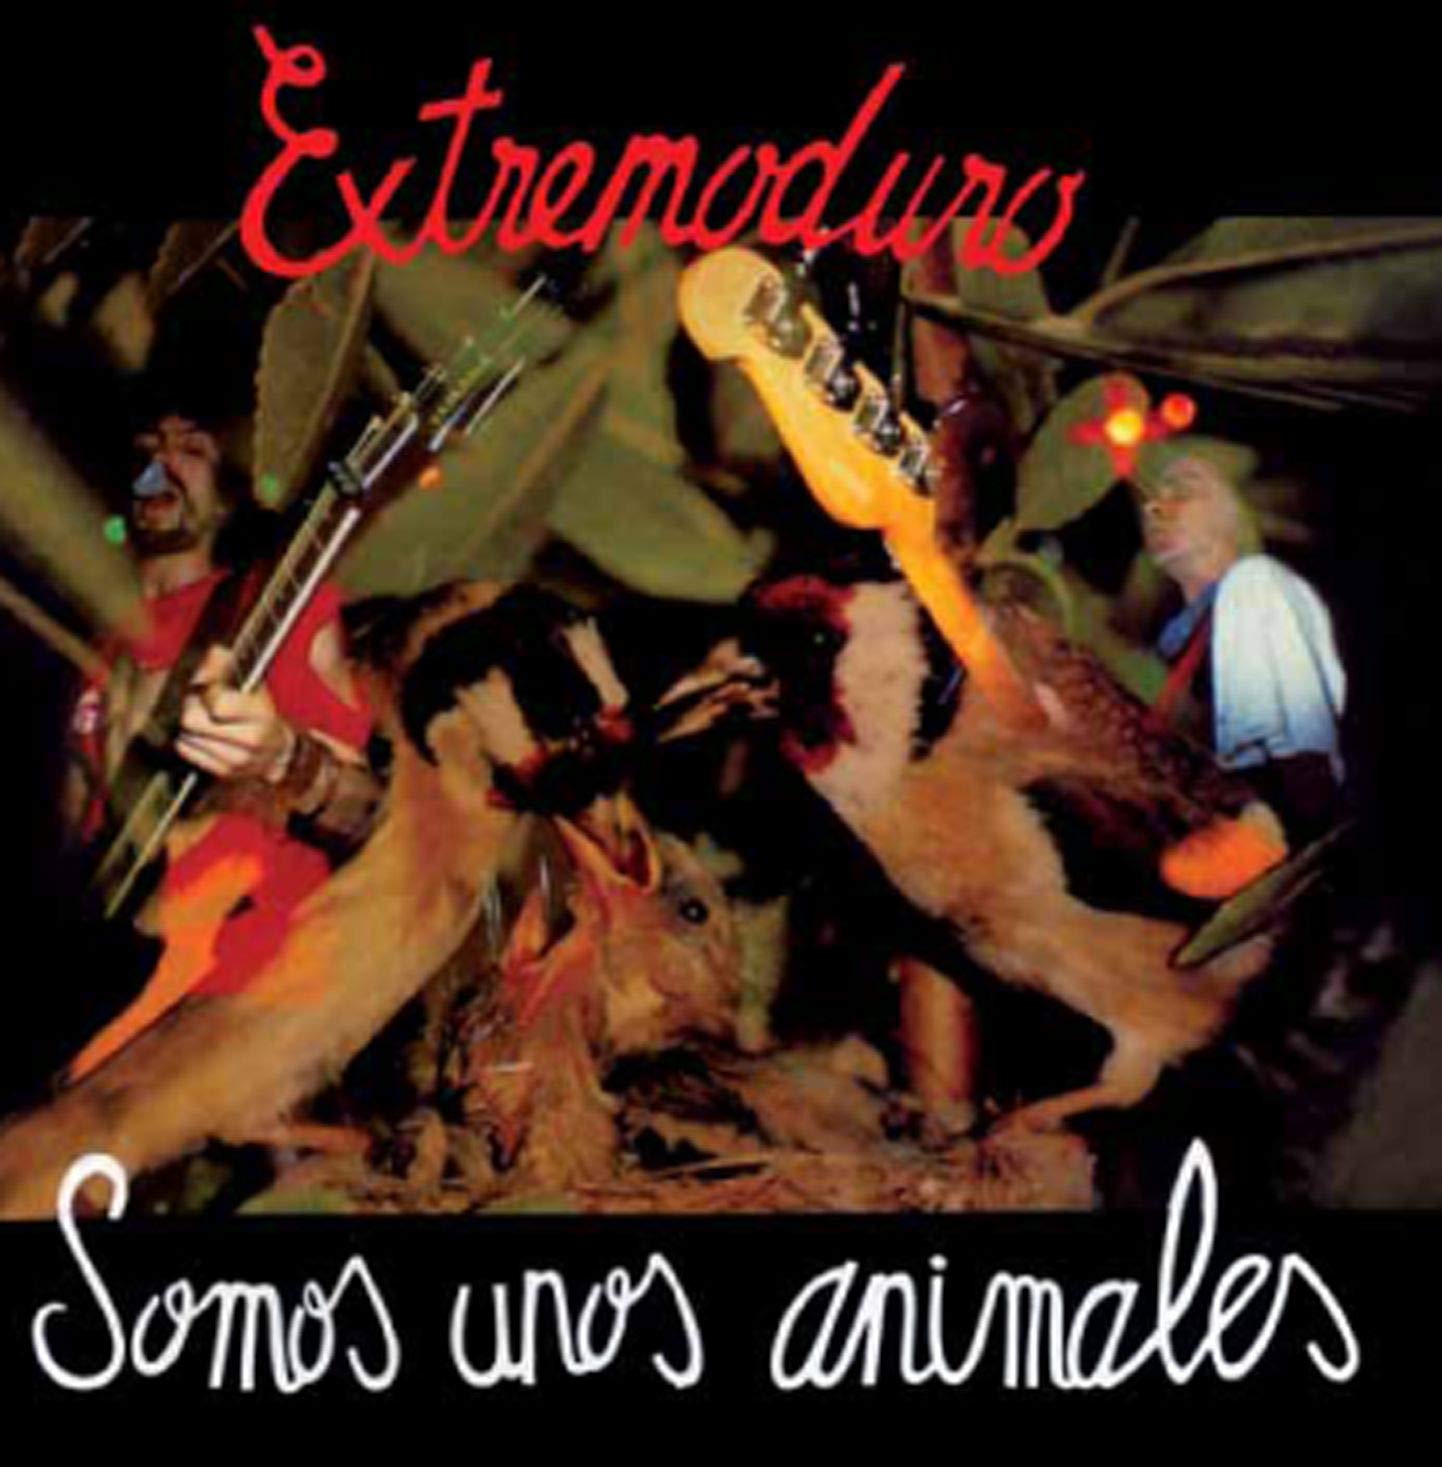 CD Extremoduro – Rock transgresivo